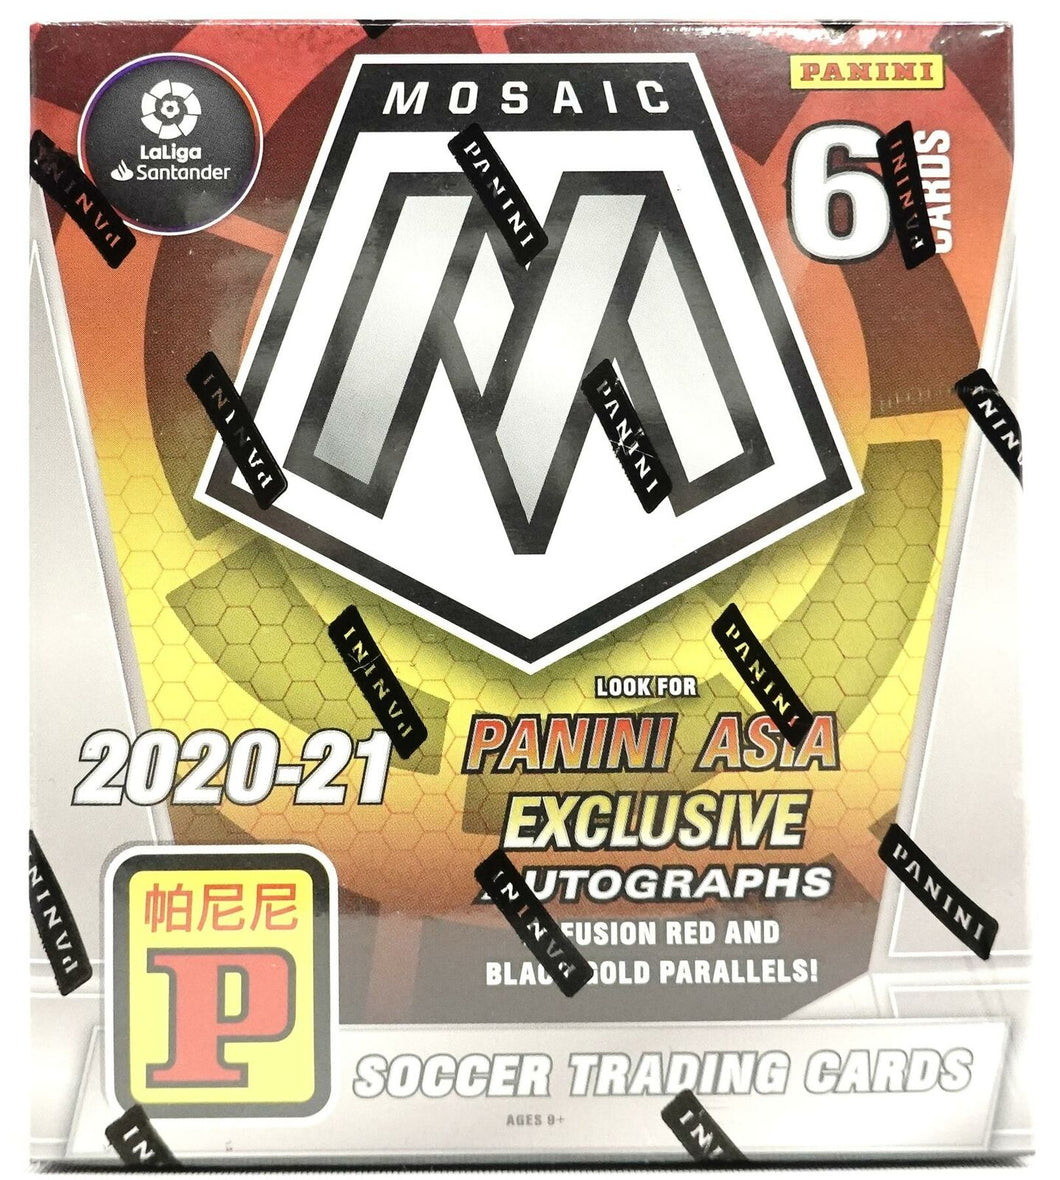 PANINI SOCCER LA LIGA MOSAIC 2020-21 TMALL HOBBY BOX (6 CARDS) x1